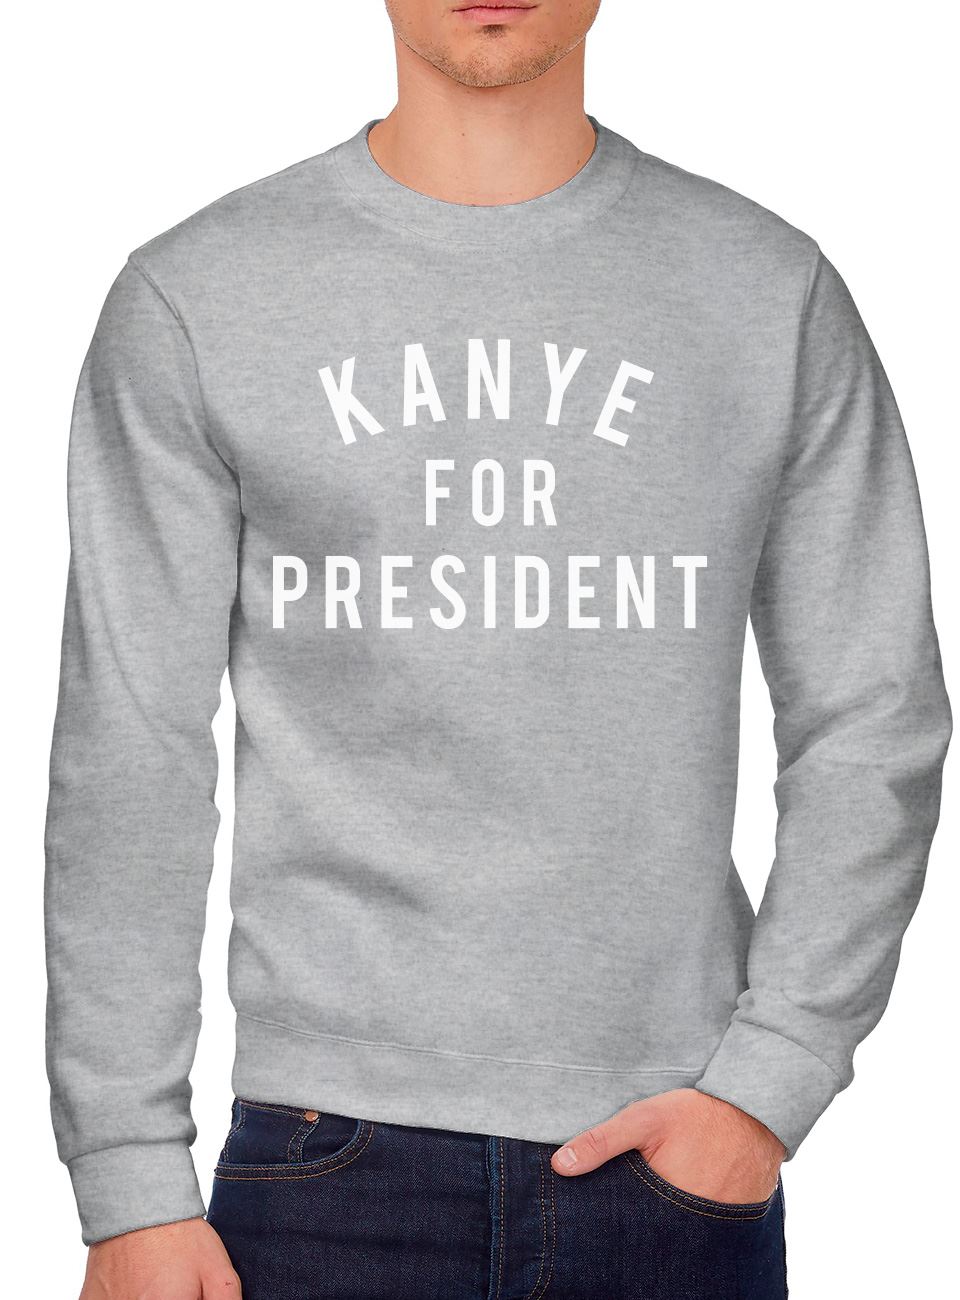 Kanye for President - Youth & Mens Sweatshirt